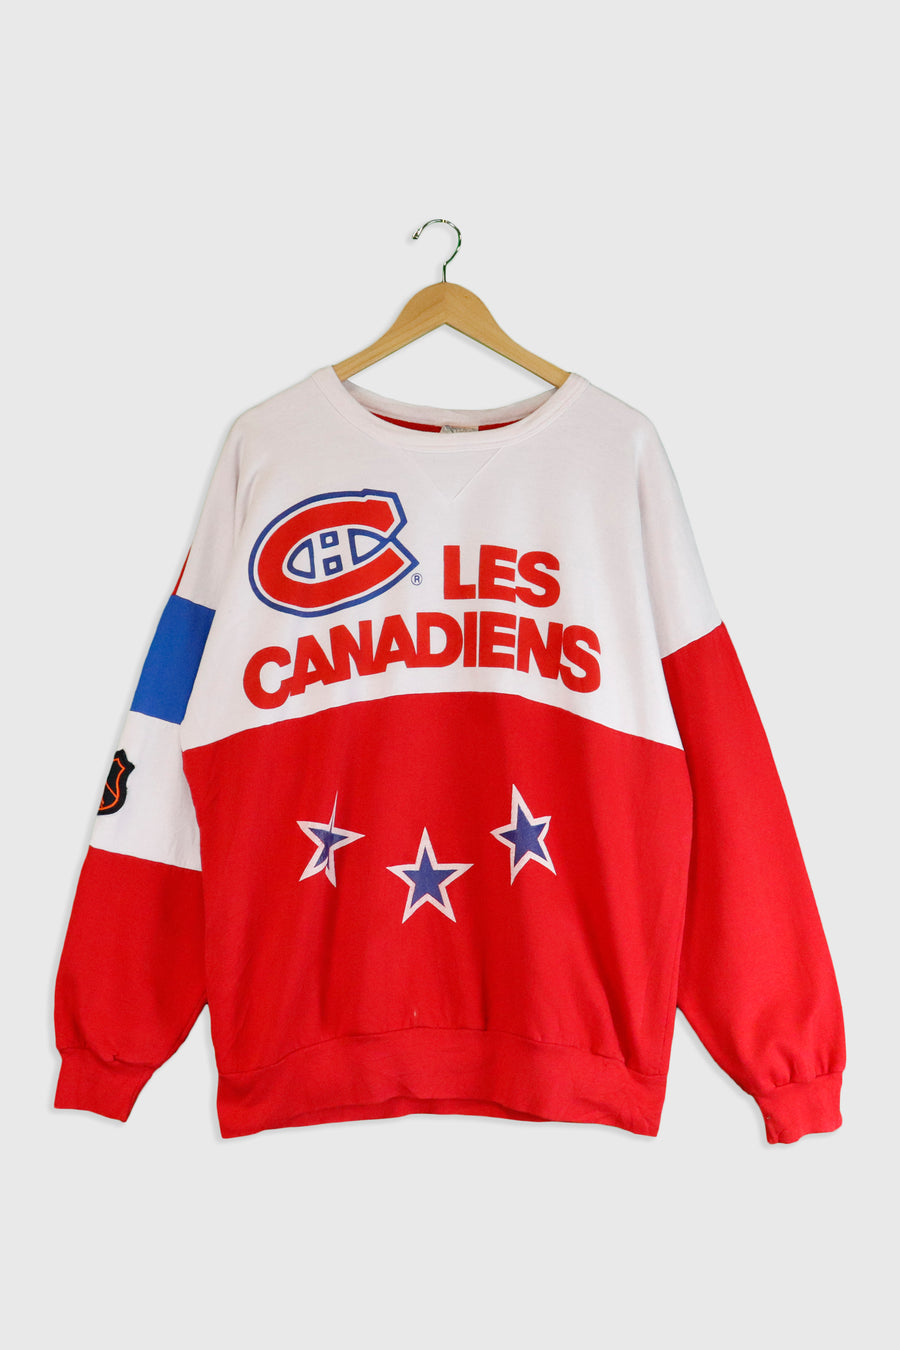 Vintage NHL Montreal Canadiens 3 Star Sweatshirt Sz L